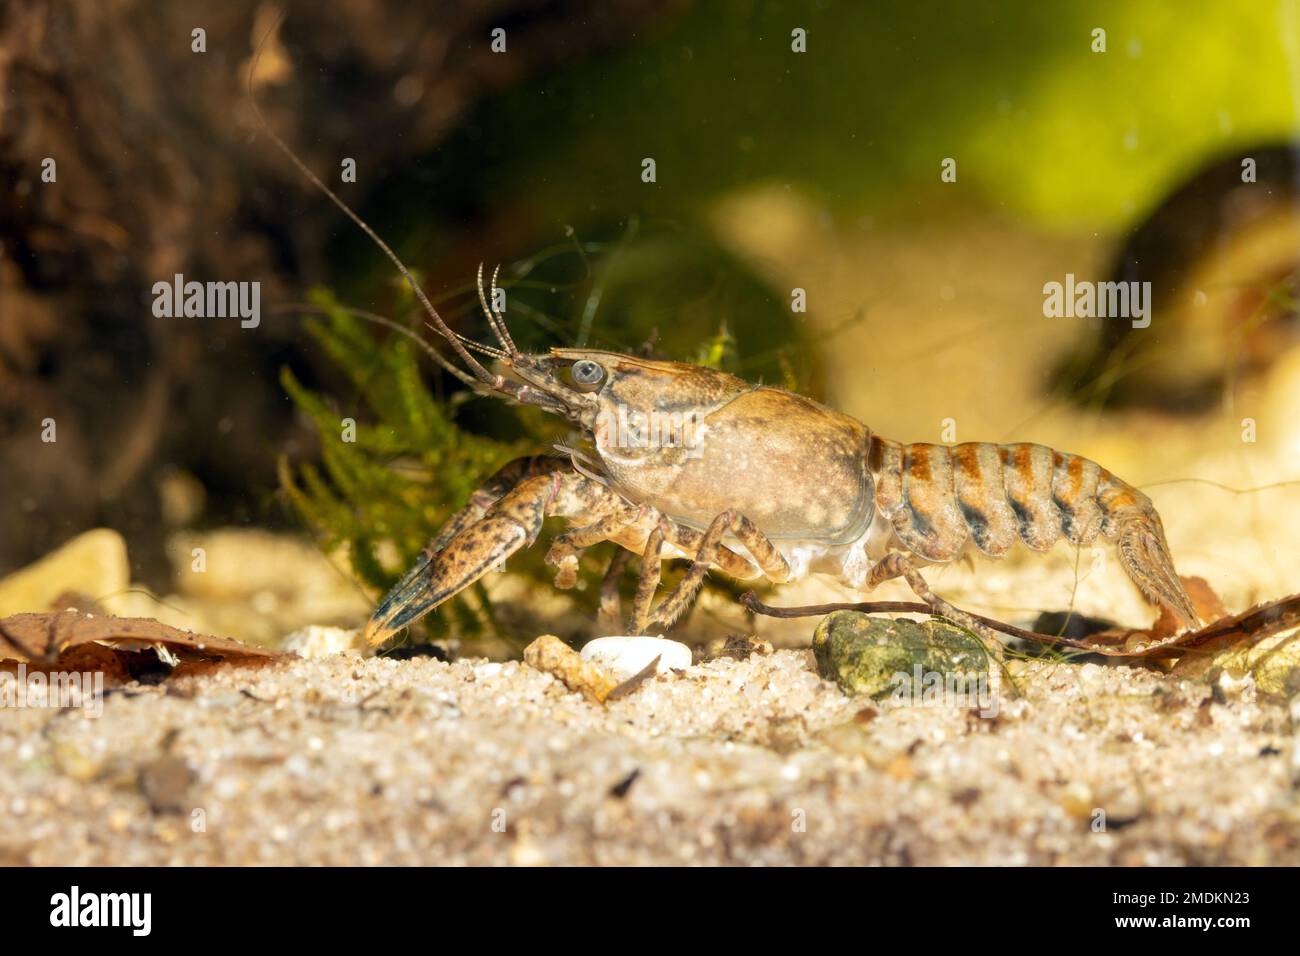 Spinycheek crayfish, American crayfish, American river crayfish, Striped crayfish (Orconectes limosus, Cambarus affinis), on creek ground, Germany, Stock Photo